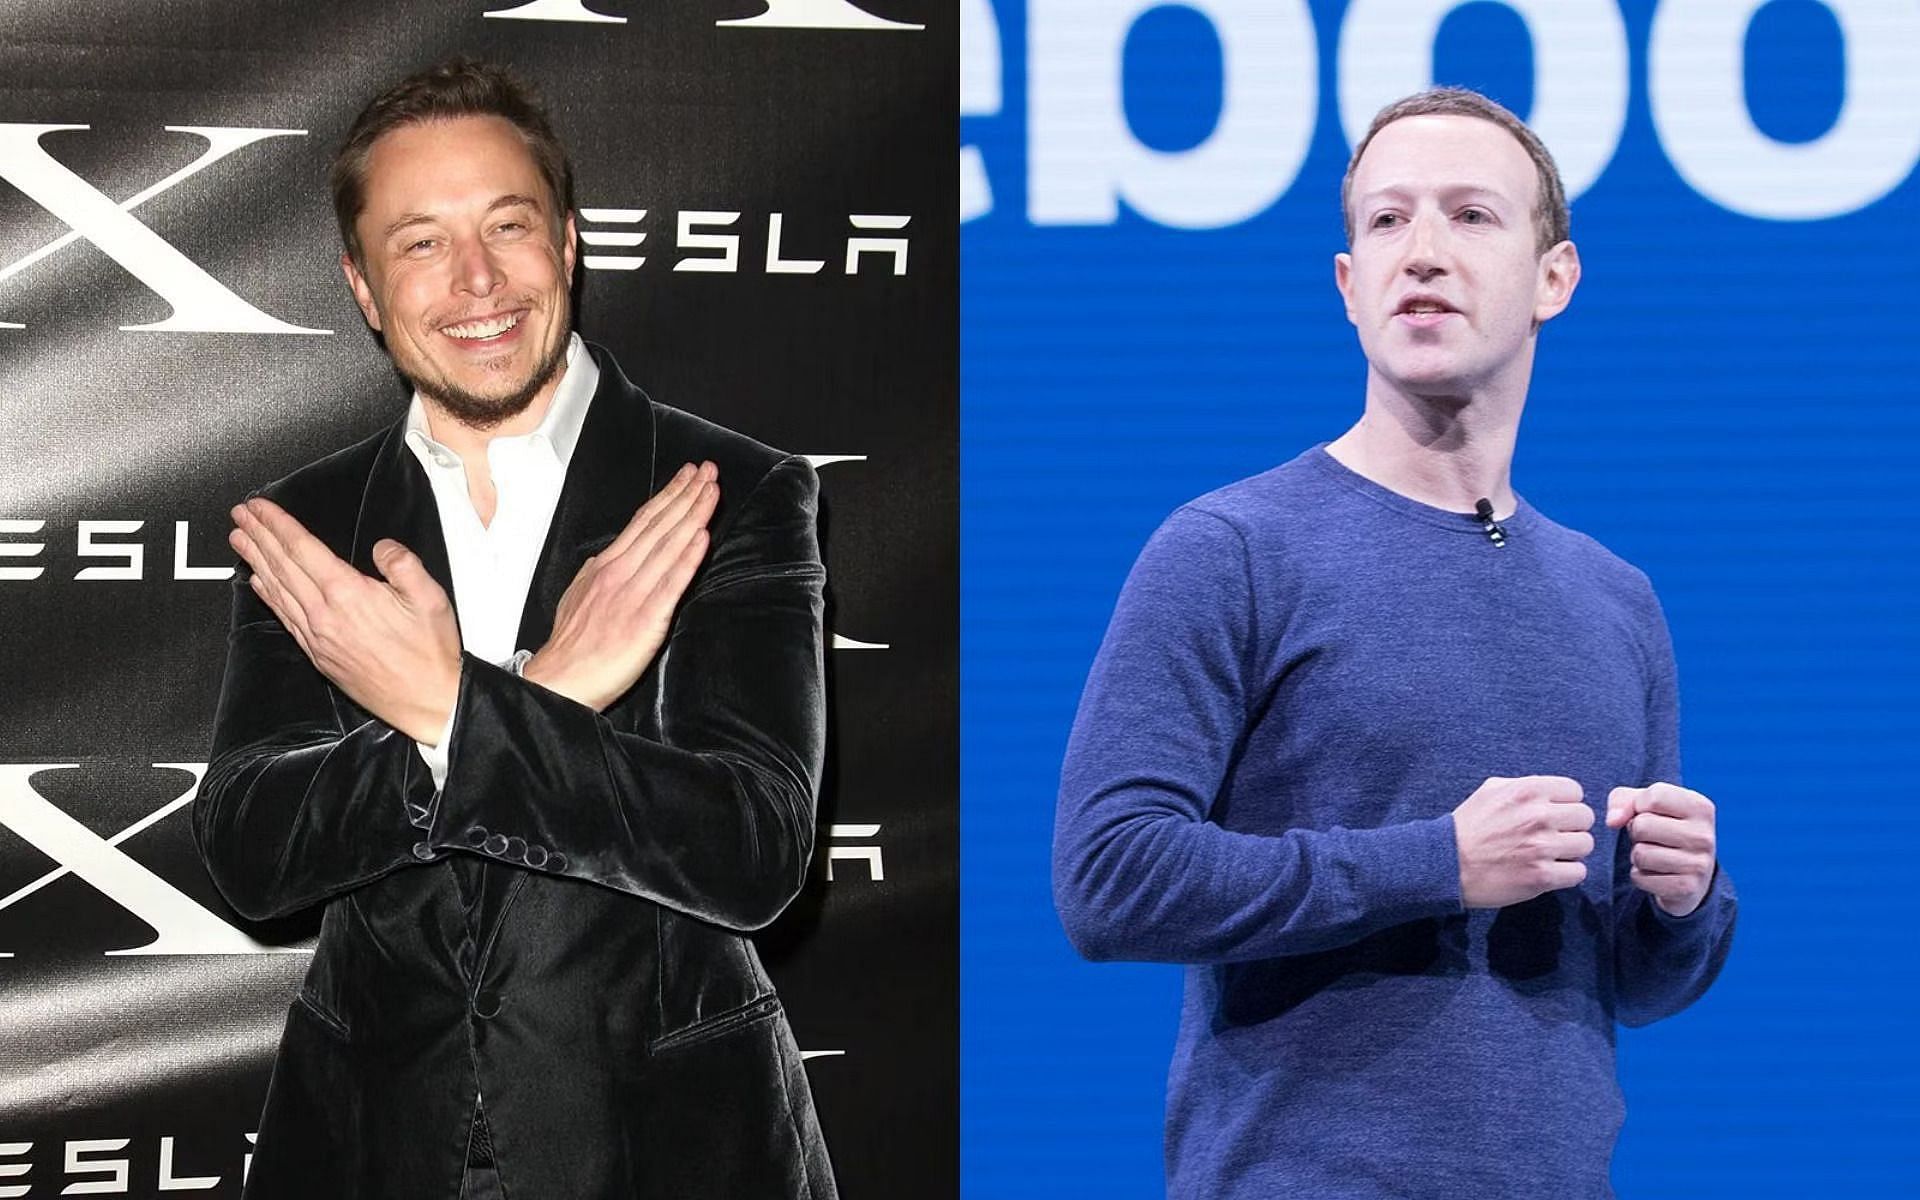 Elon Musk (left) and Mark Zuckerberg (right) [Image credits: @elonmusk on Instagram, @AnthonyQuintano on Twitter]